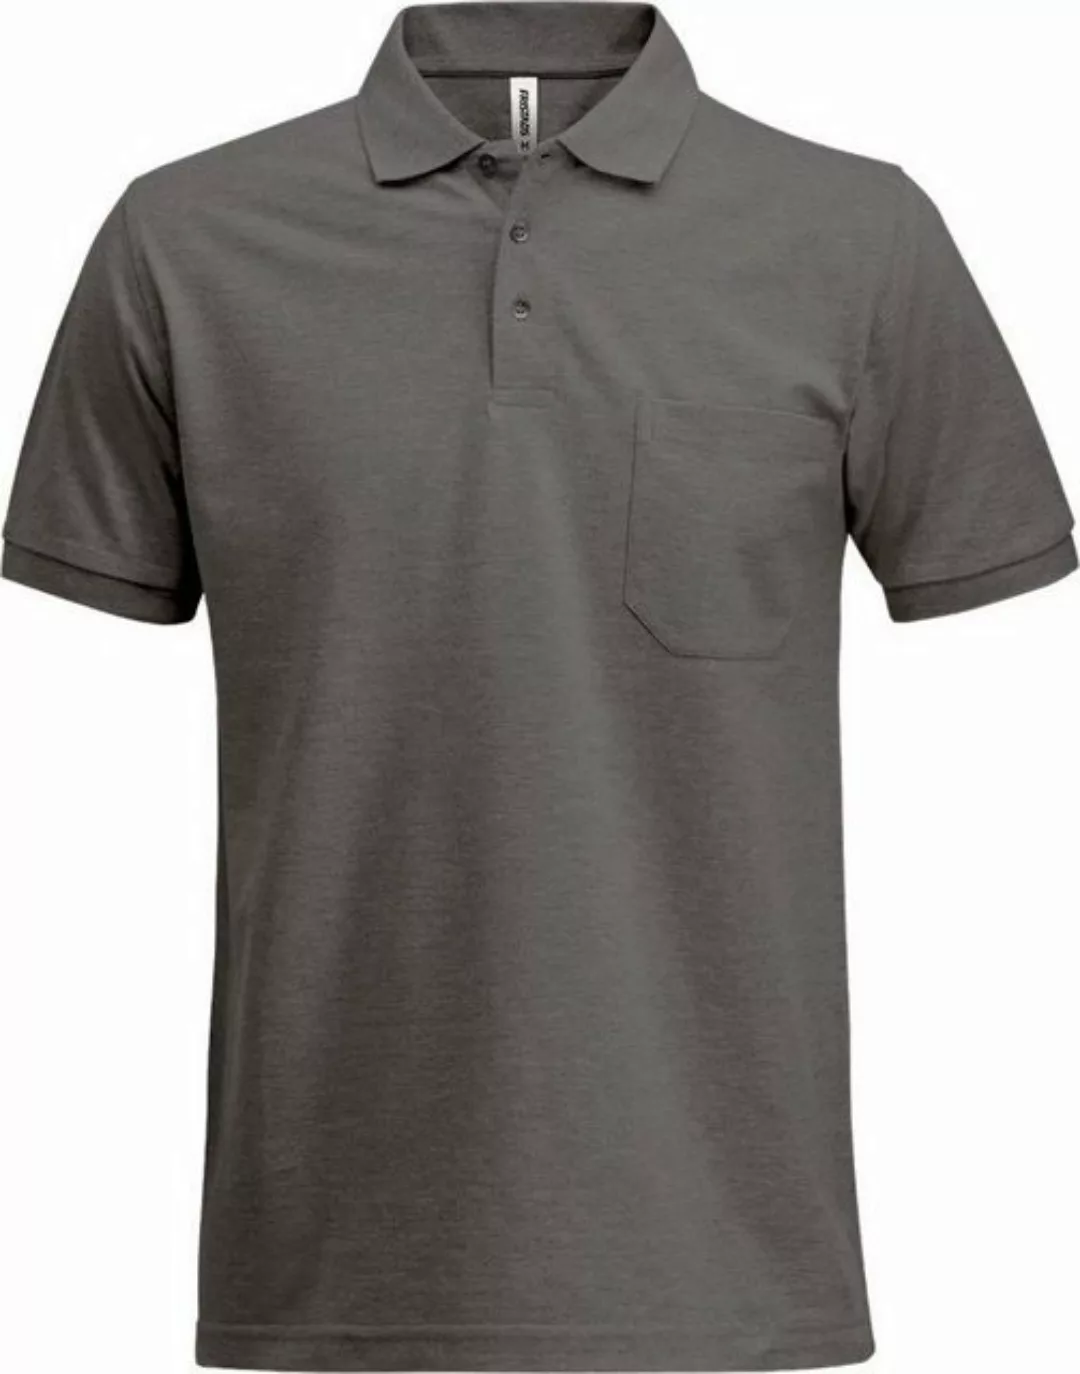 Fristads Poloshirt High Vis Jacke Kl. 3 4794 Th günstig online kaufen